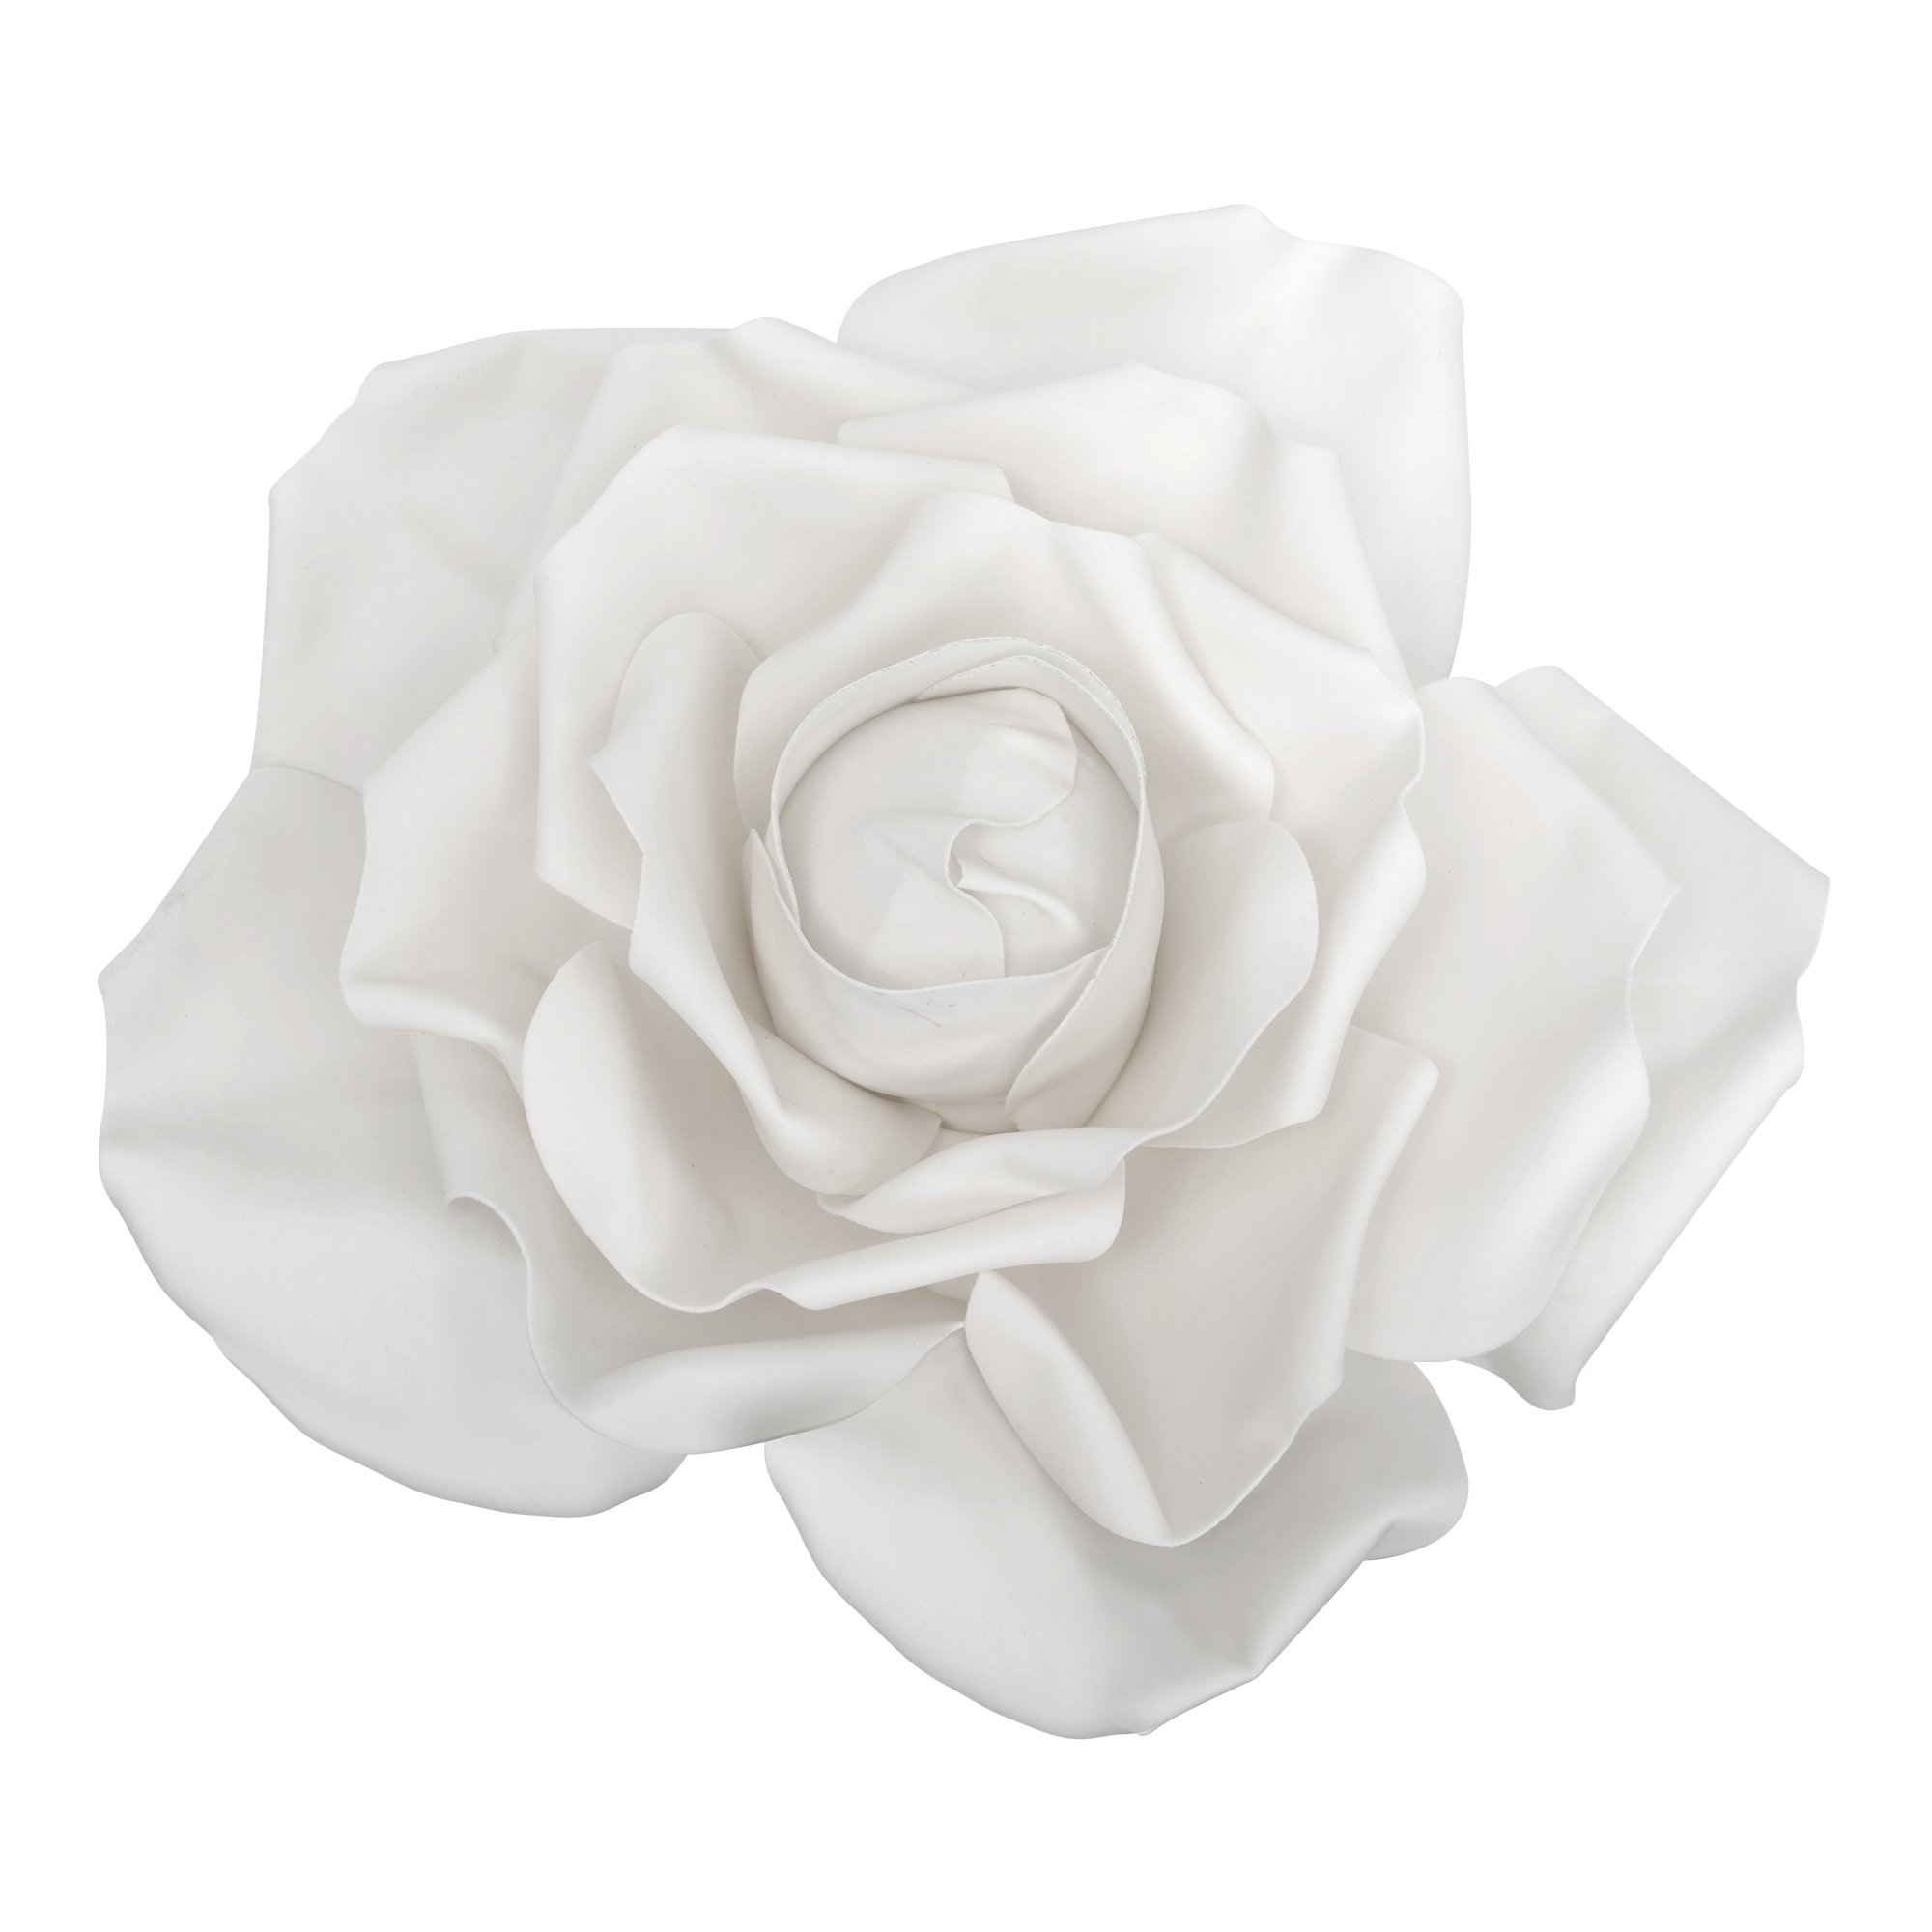 Foam Rose With LED Light 20" - White